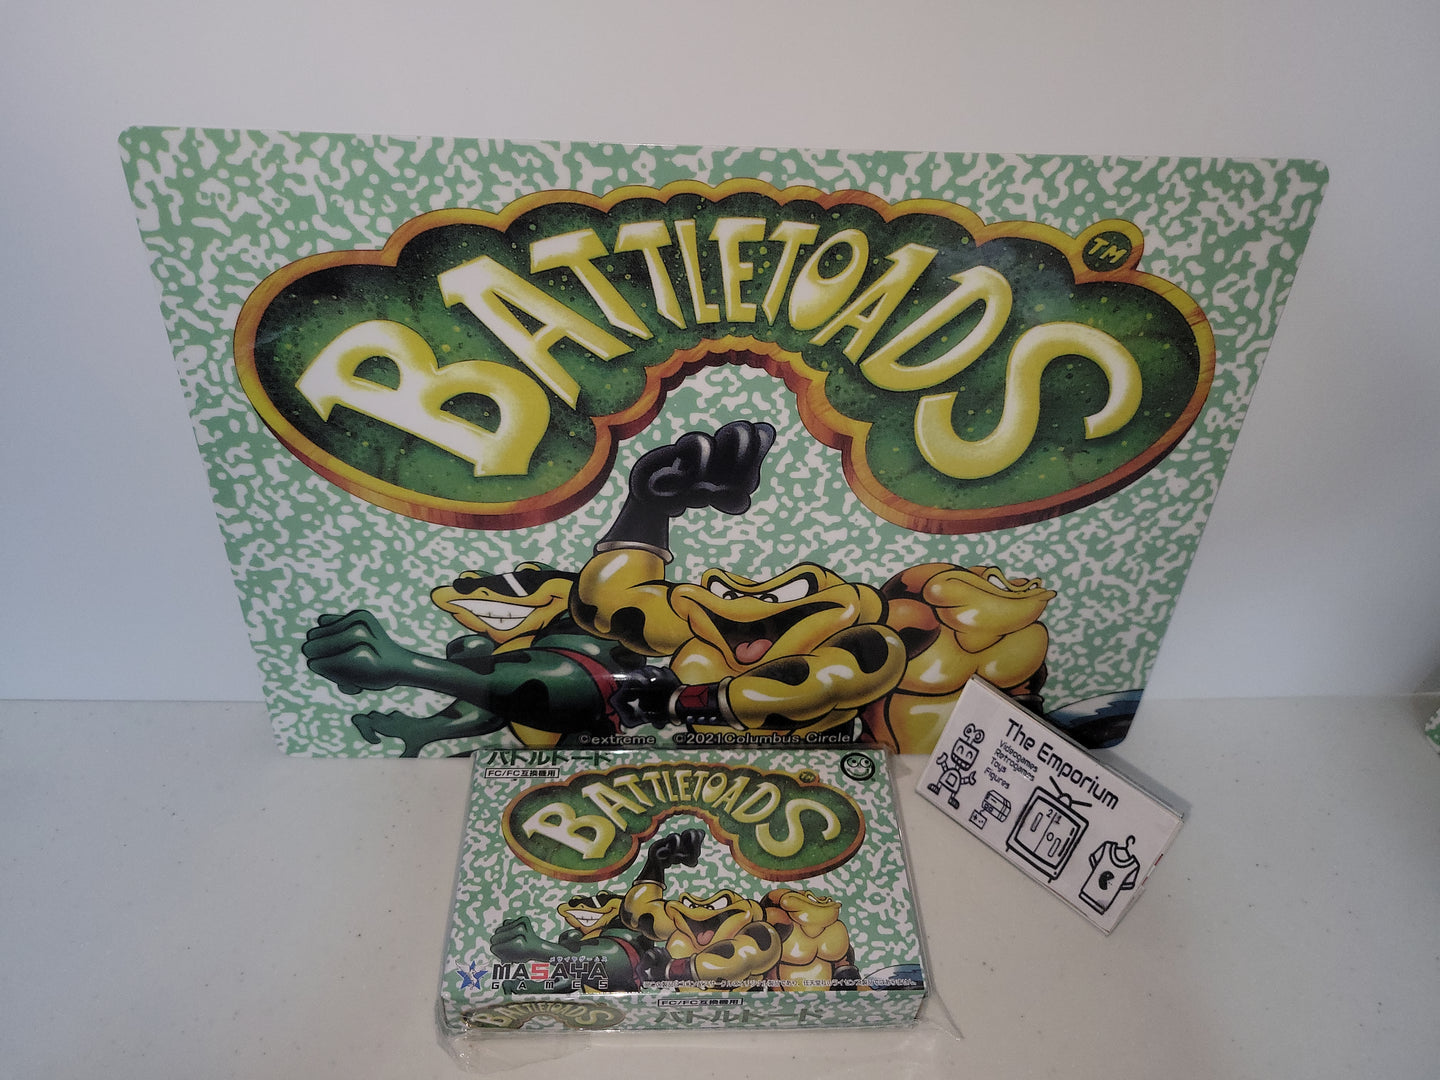 Battletoads - Nintendo Fc Famicom